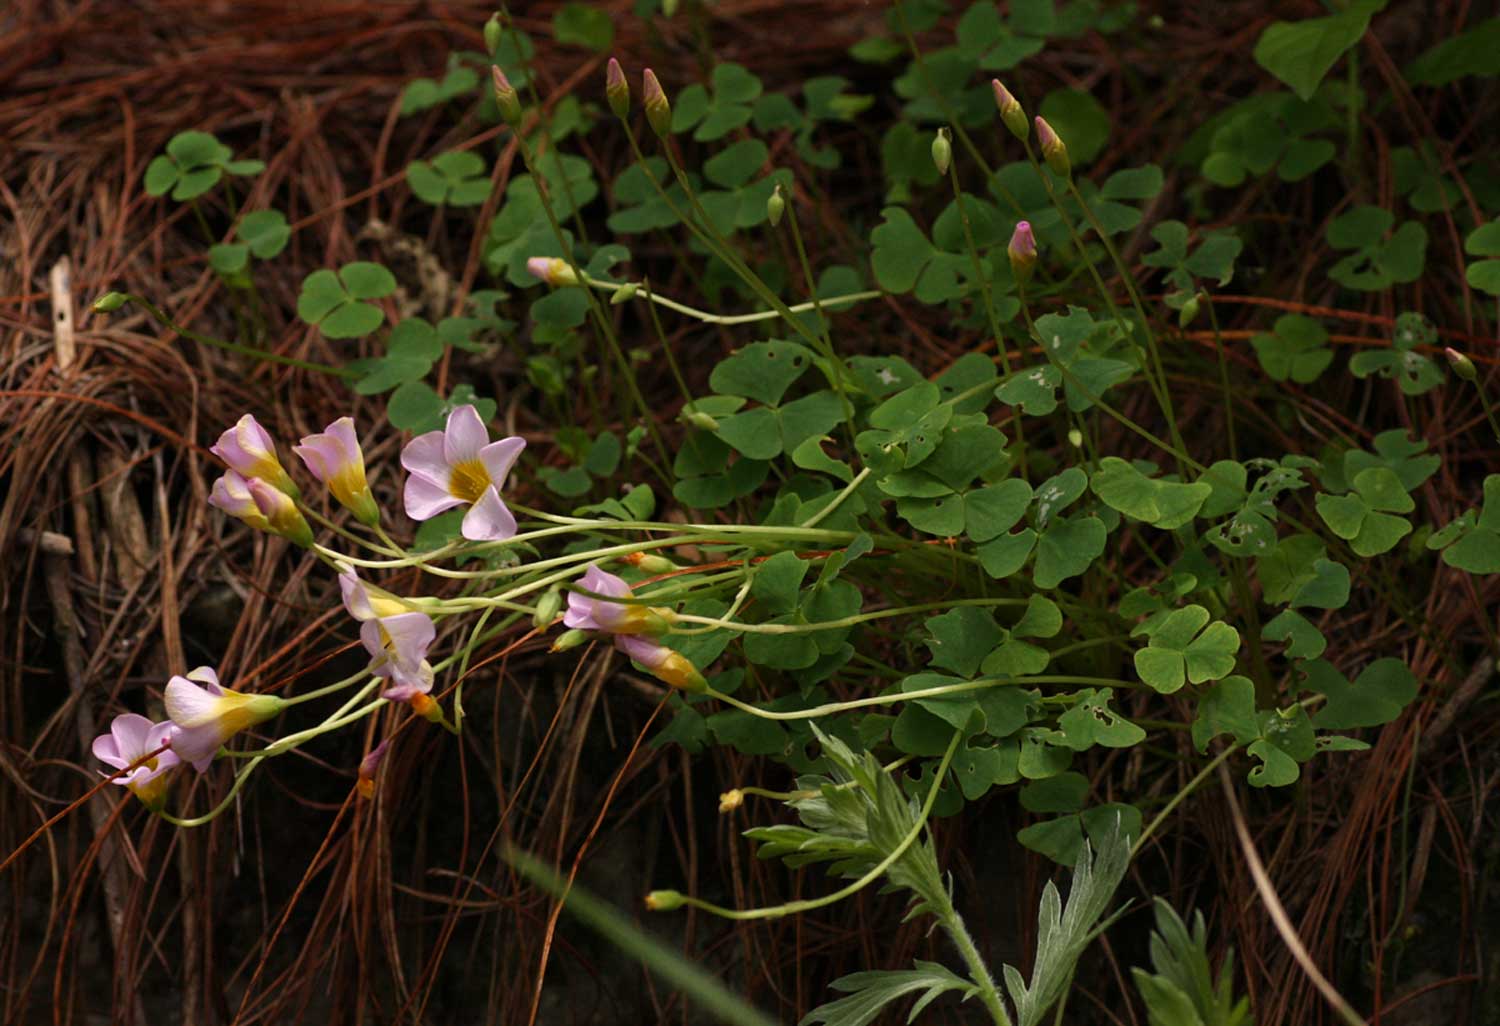 Oxalis obliquifolia